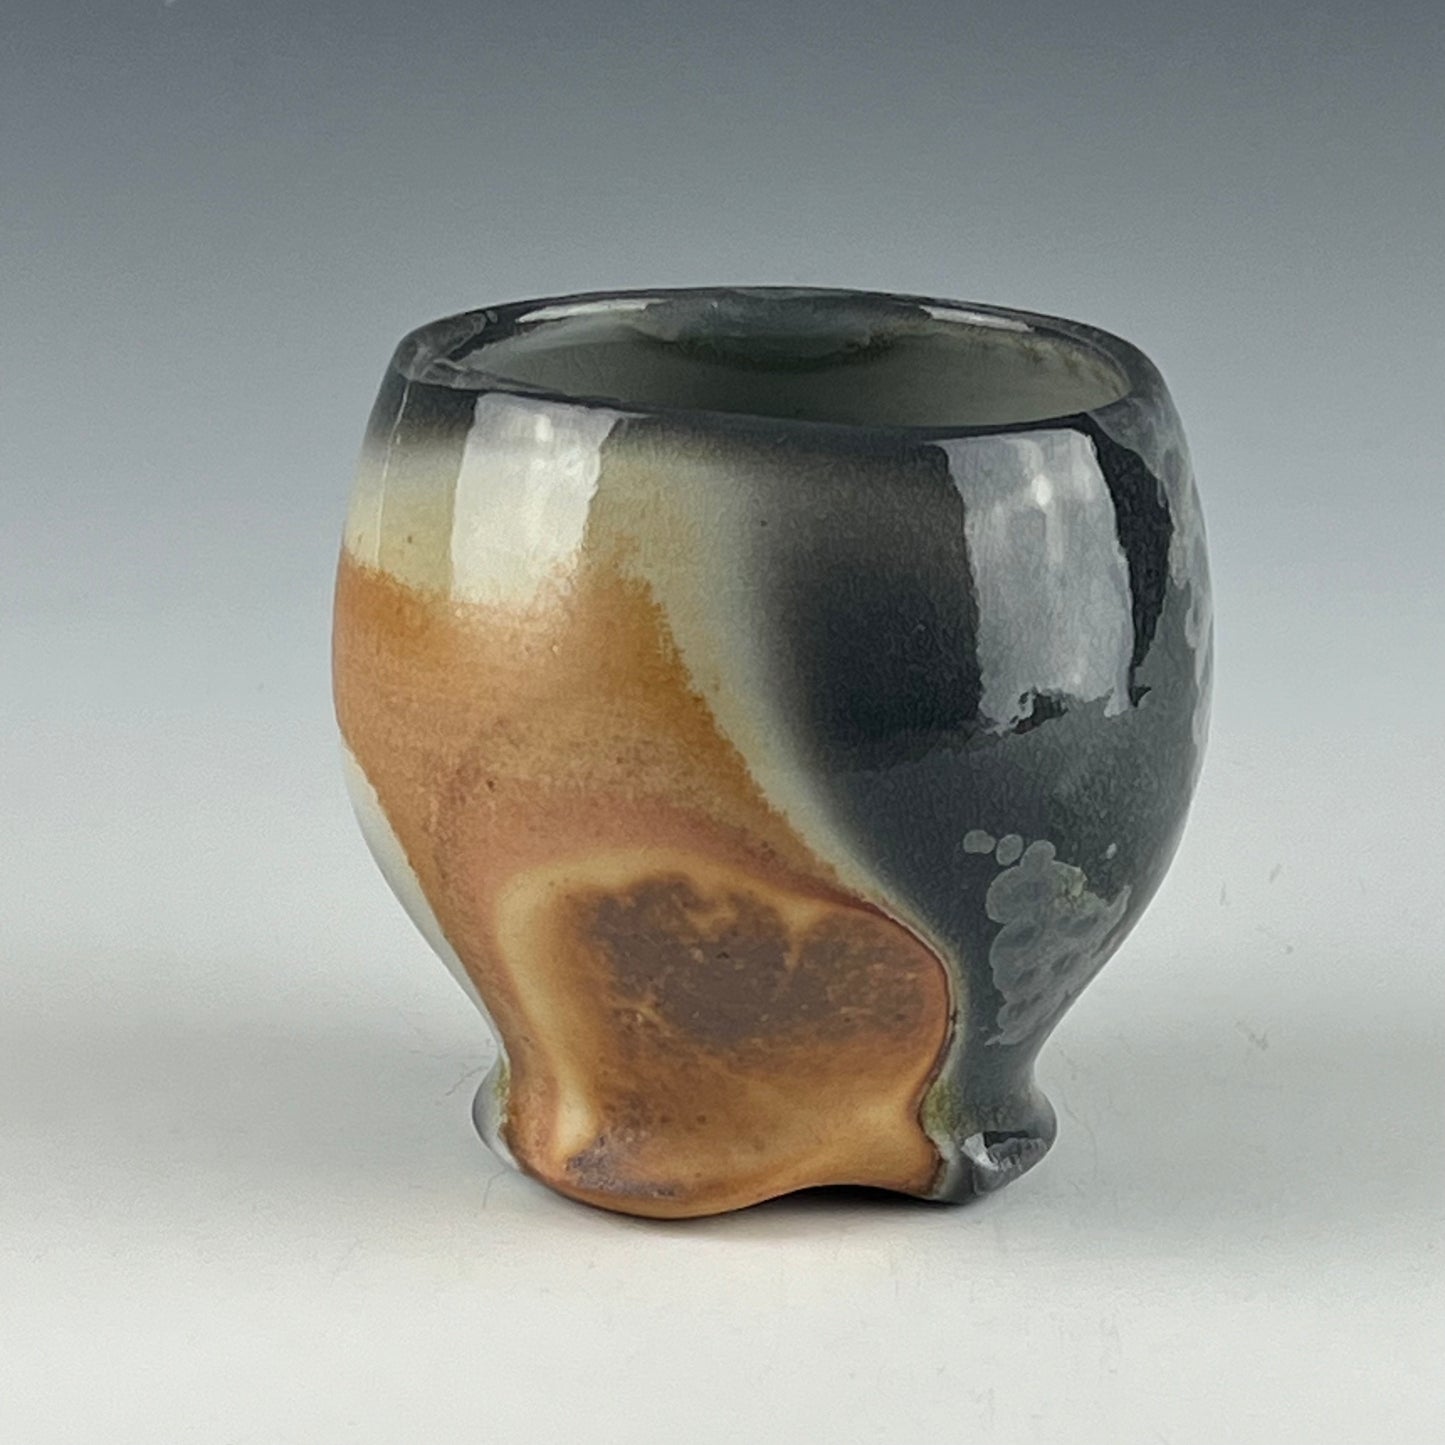 Porcelain wine cup or tea bowl